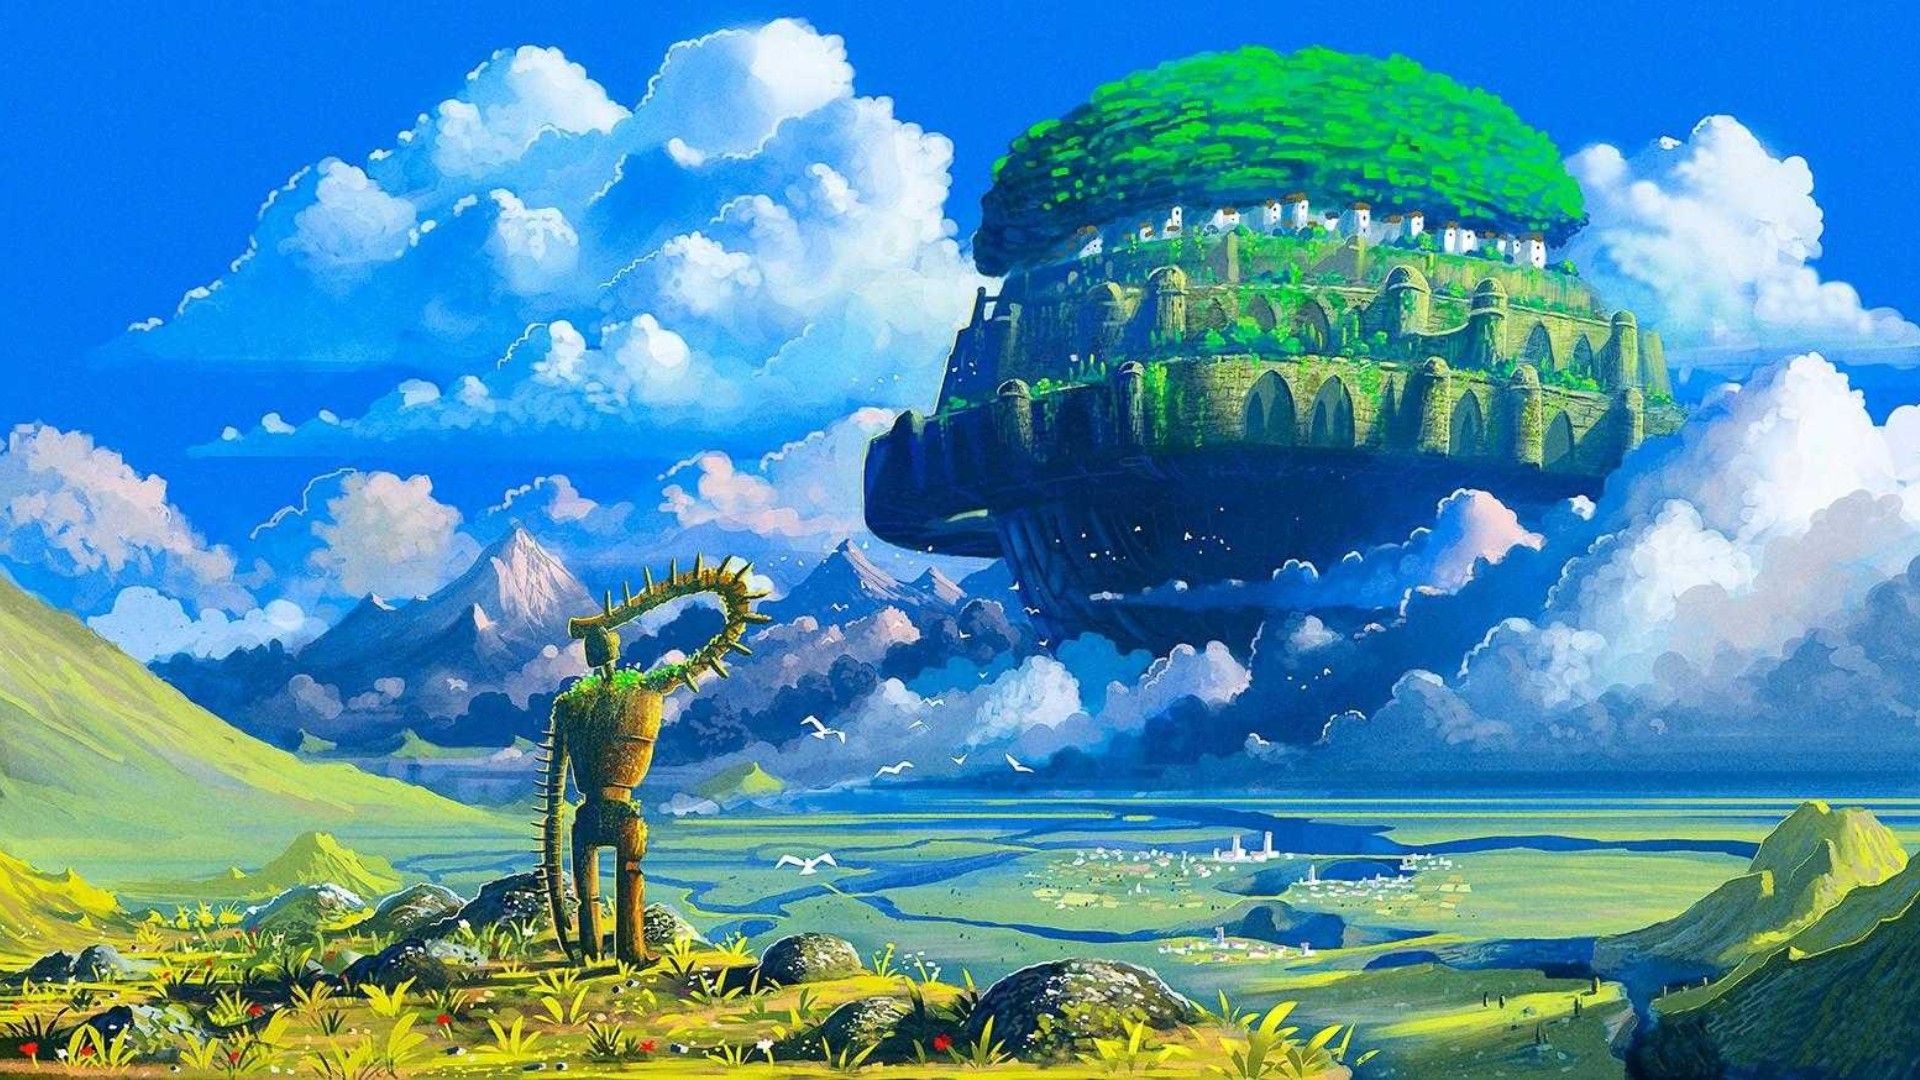 Studio Ghibli Wallpaper - Studio Ghibli Background, Photo & Image Download